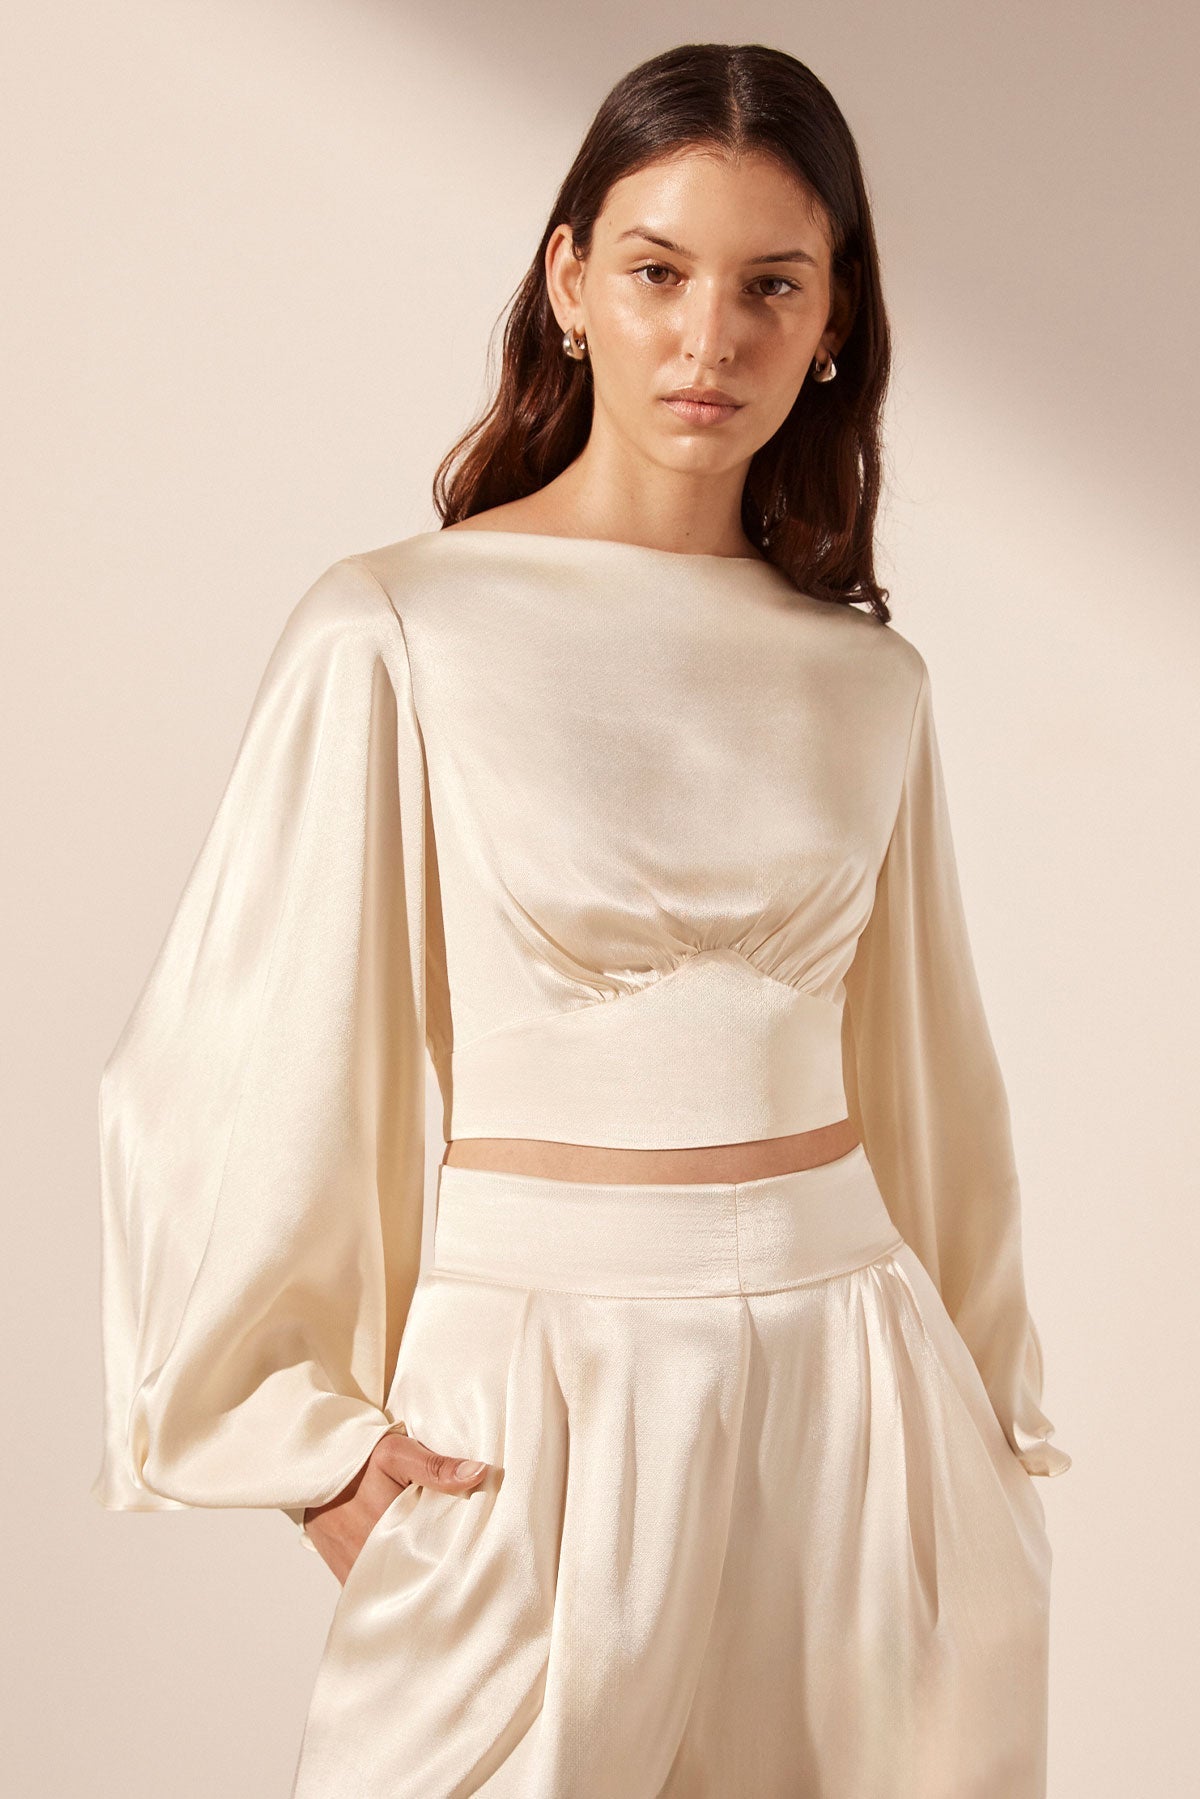 Shona Joy La Lune High Waist Maxi Bridal Skirt New Wedding Dress Save 18% -  Stillwhite